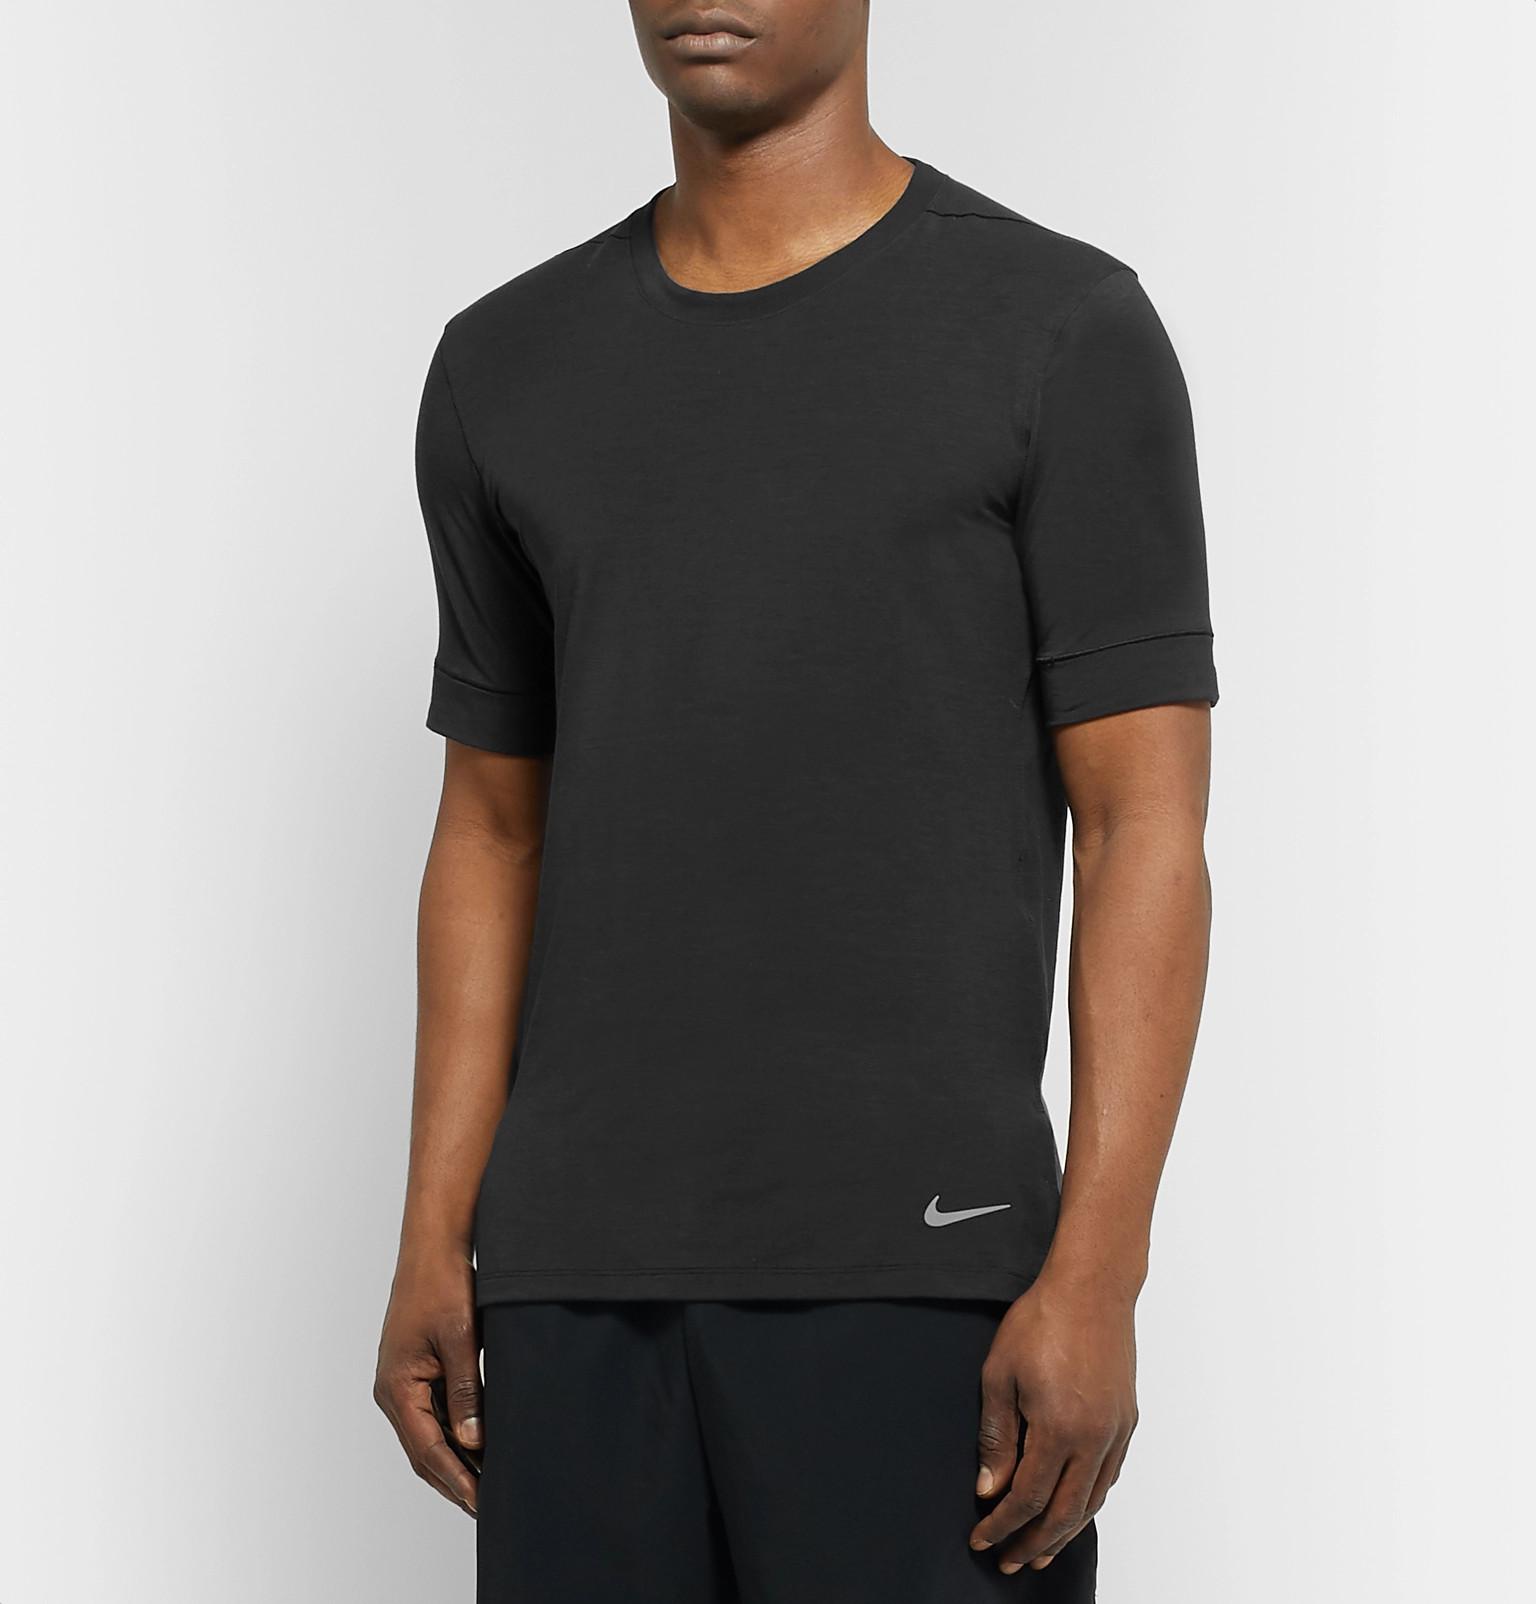 Nike Transcend Slim-fit Dri-fit Yoga T-shirt in Black for Men - Lyst